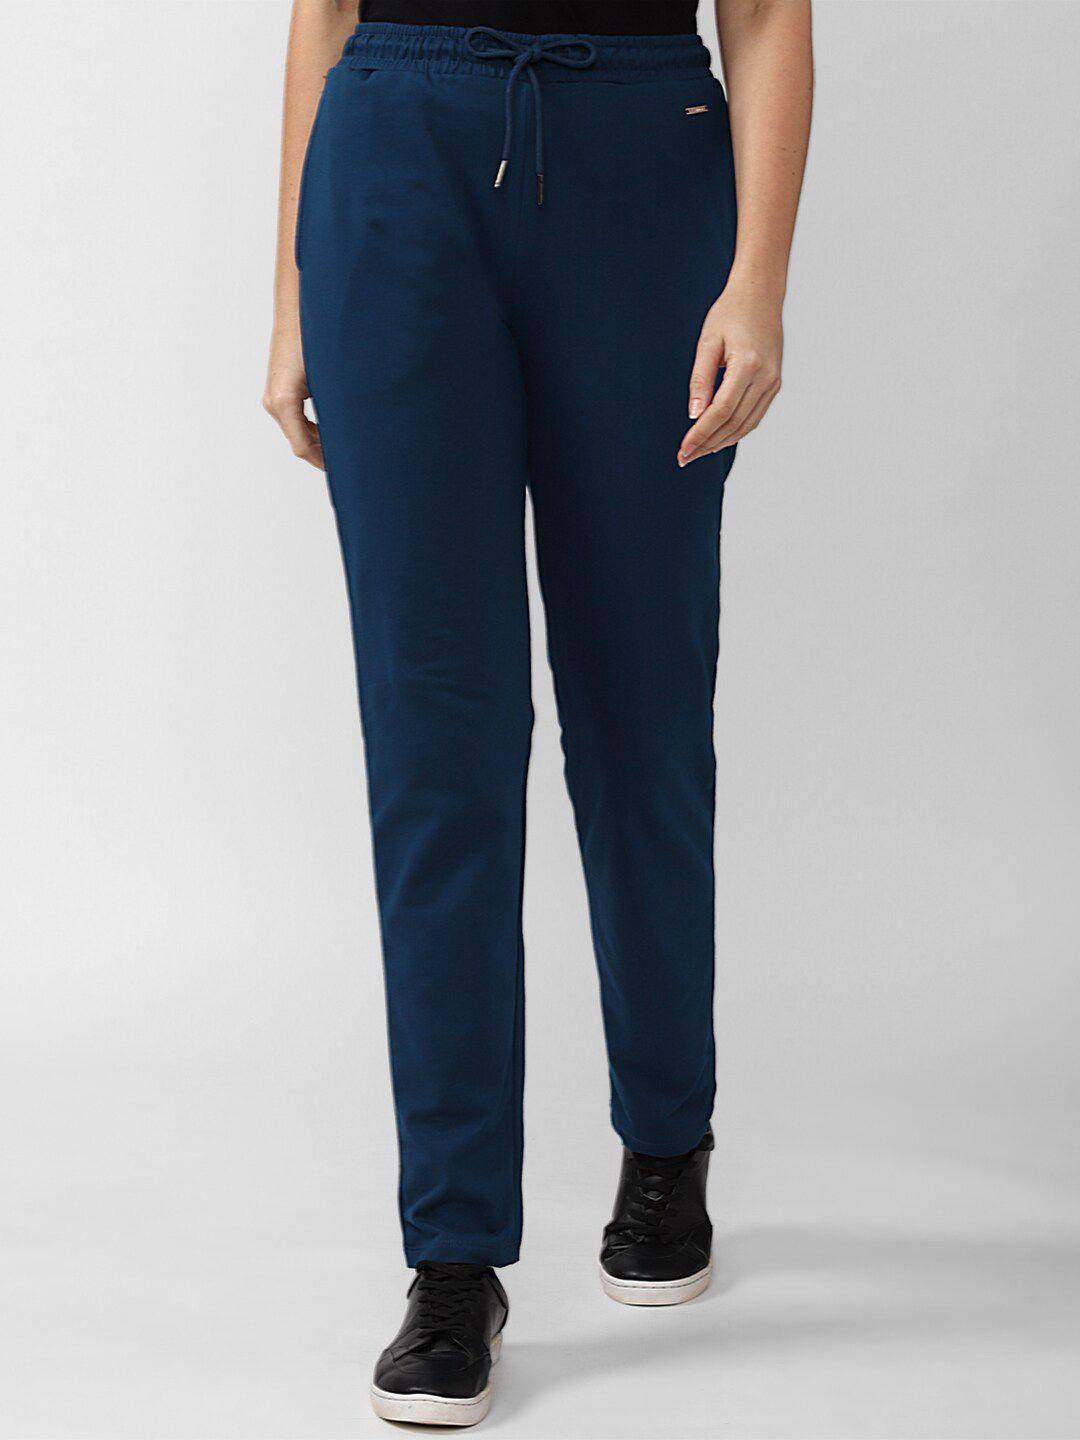 Van Heusen Woman Blue Solid Cotton Joggers Trousers